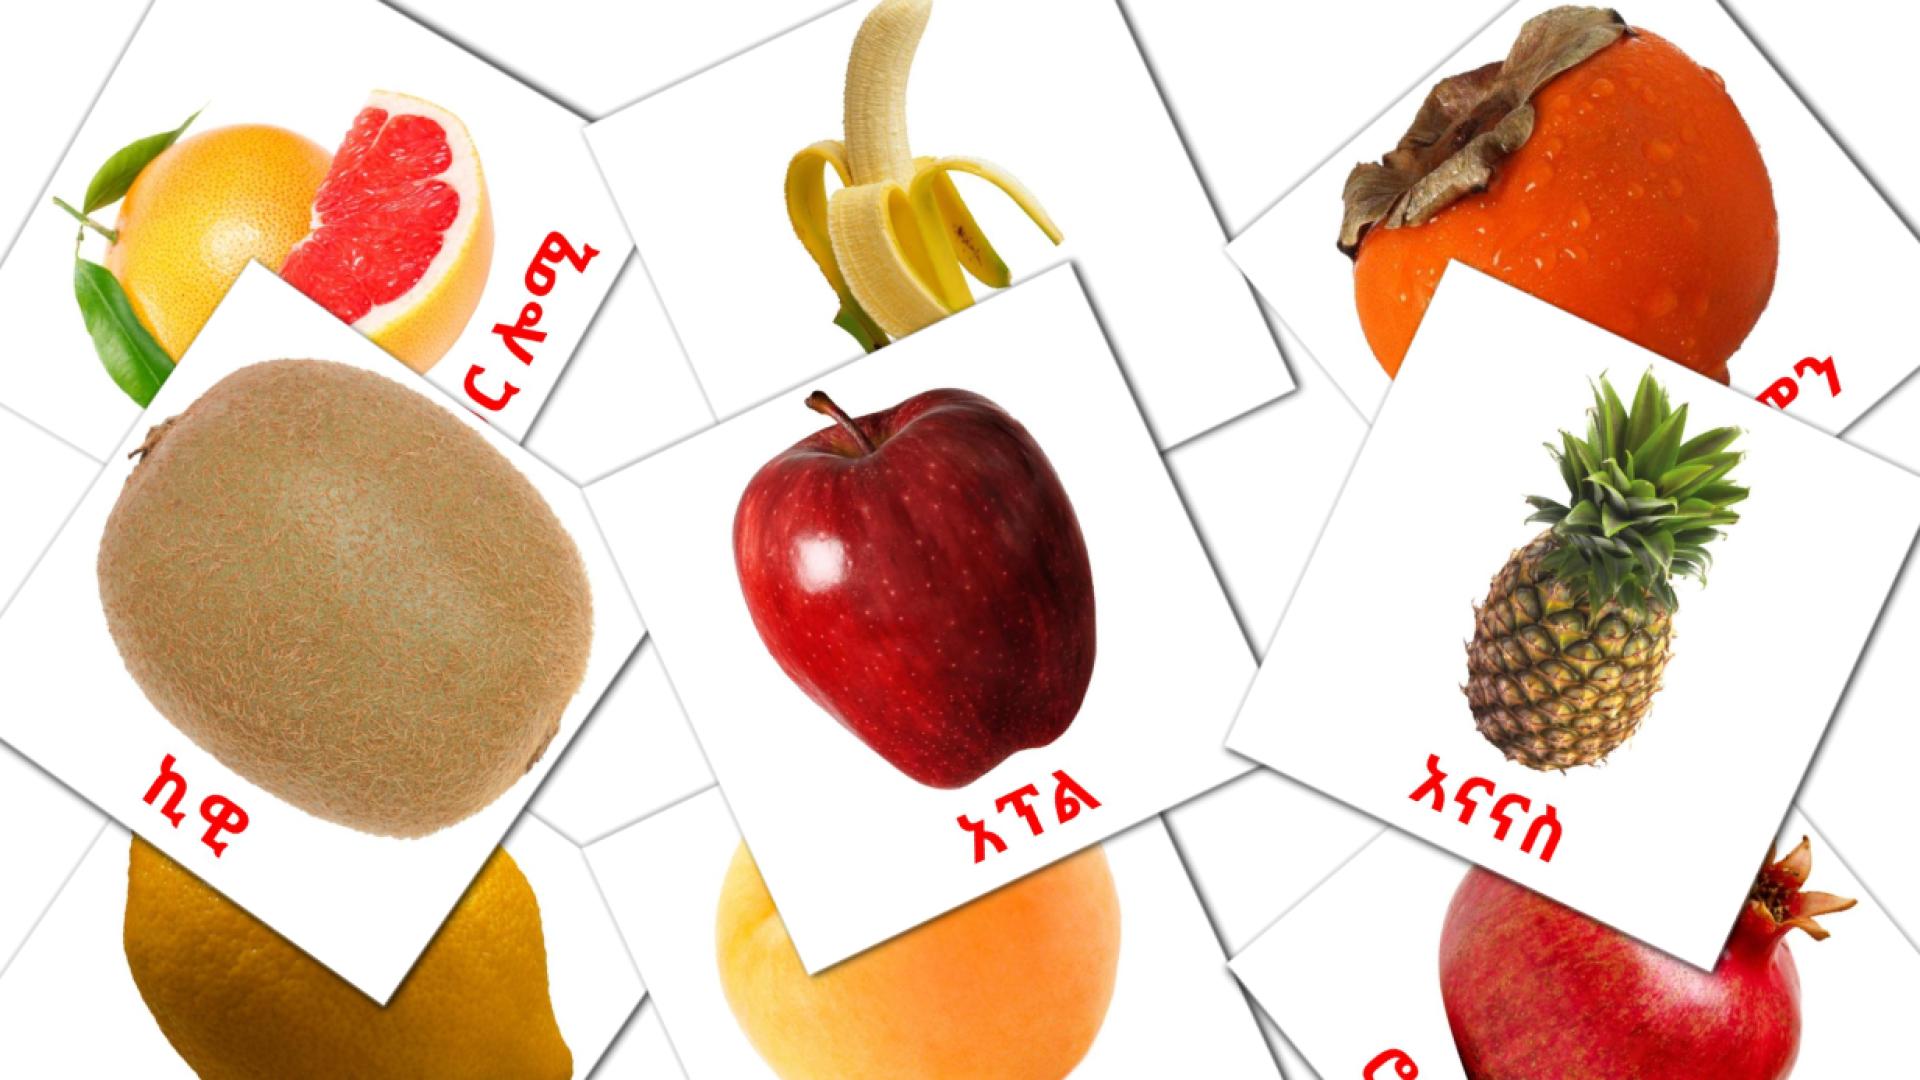 Fruits - amharic vocabulary cards